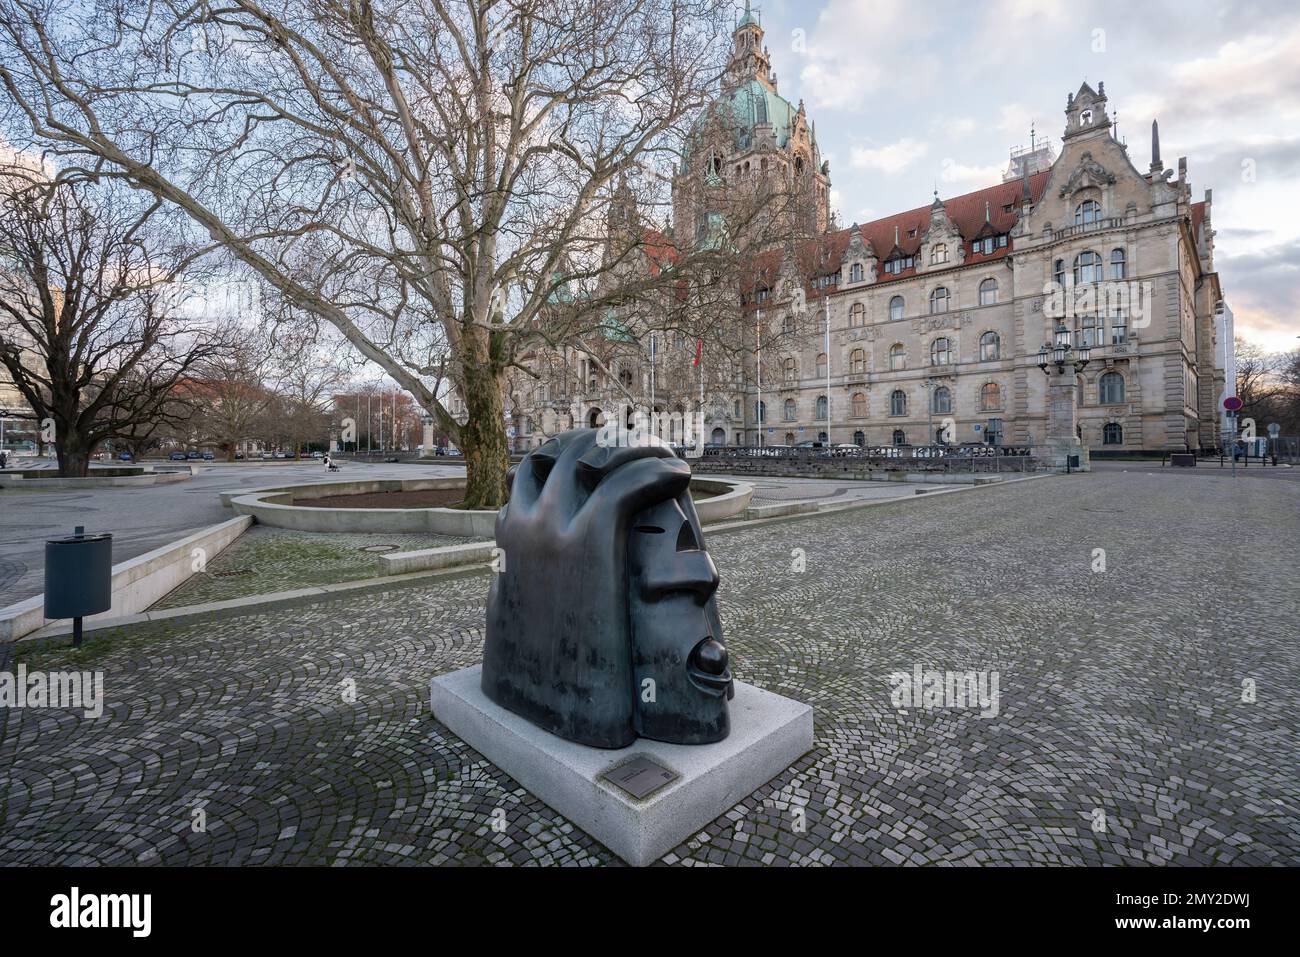 Grosser verletzter Kopf (grosse tête blessée) Sculpture de Rainer Kriester avec nouvel Hôtel de ville - Hanovre, Basse-Saxe, Allemagne Banque D'Images